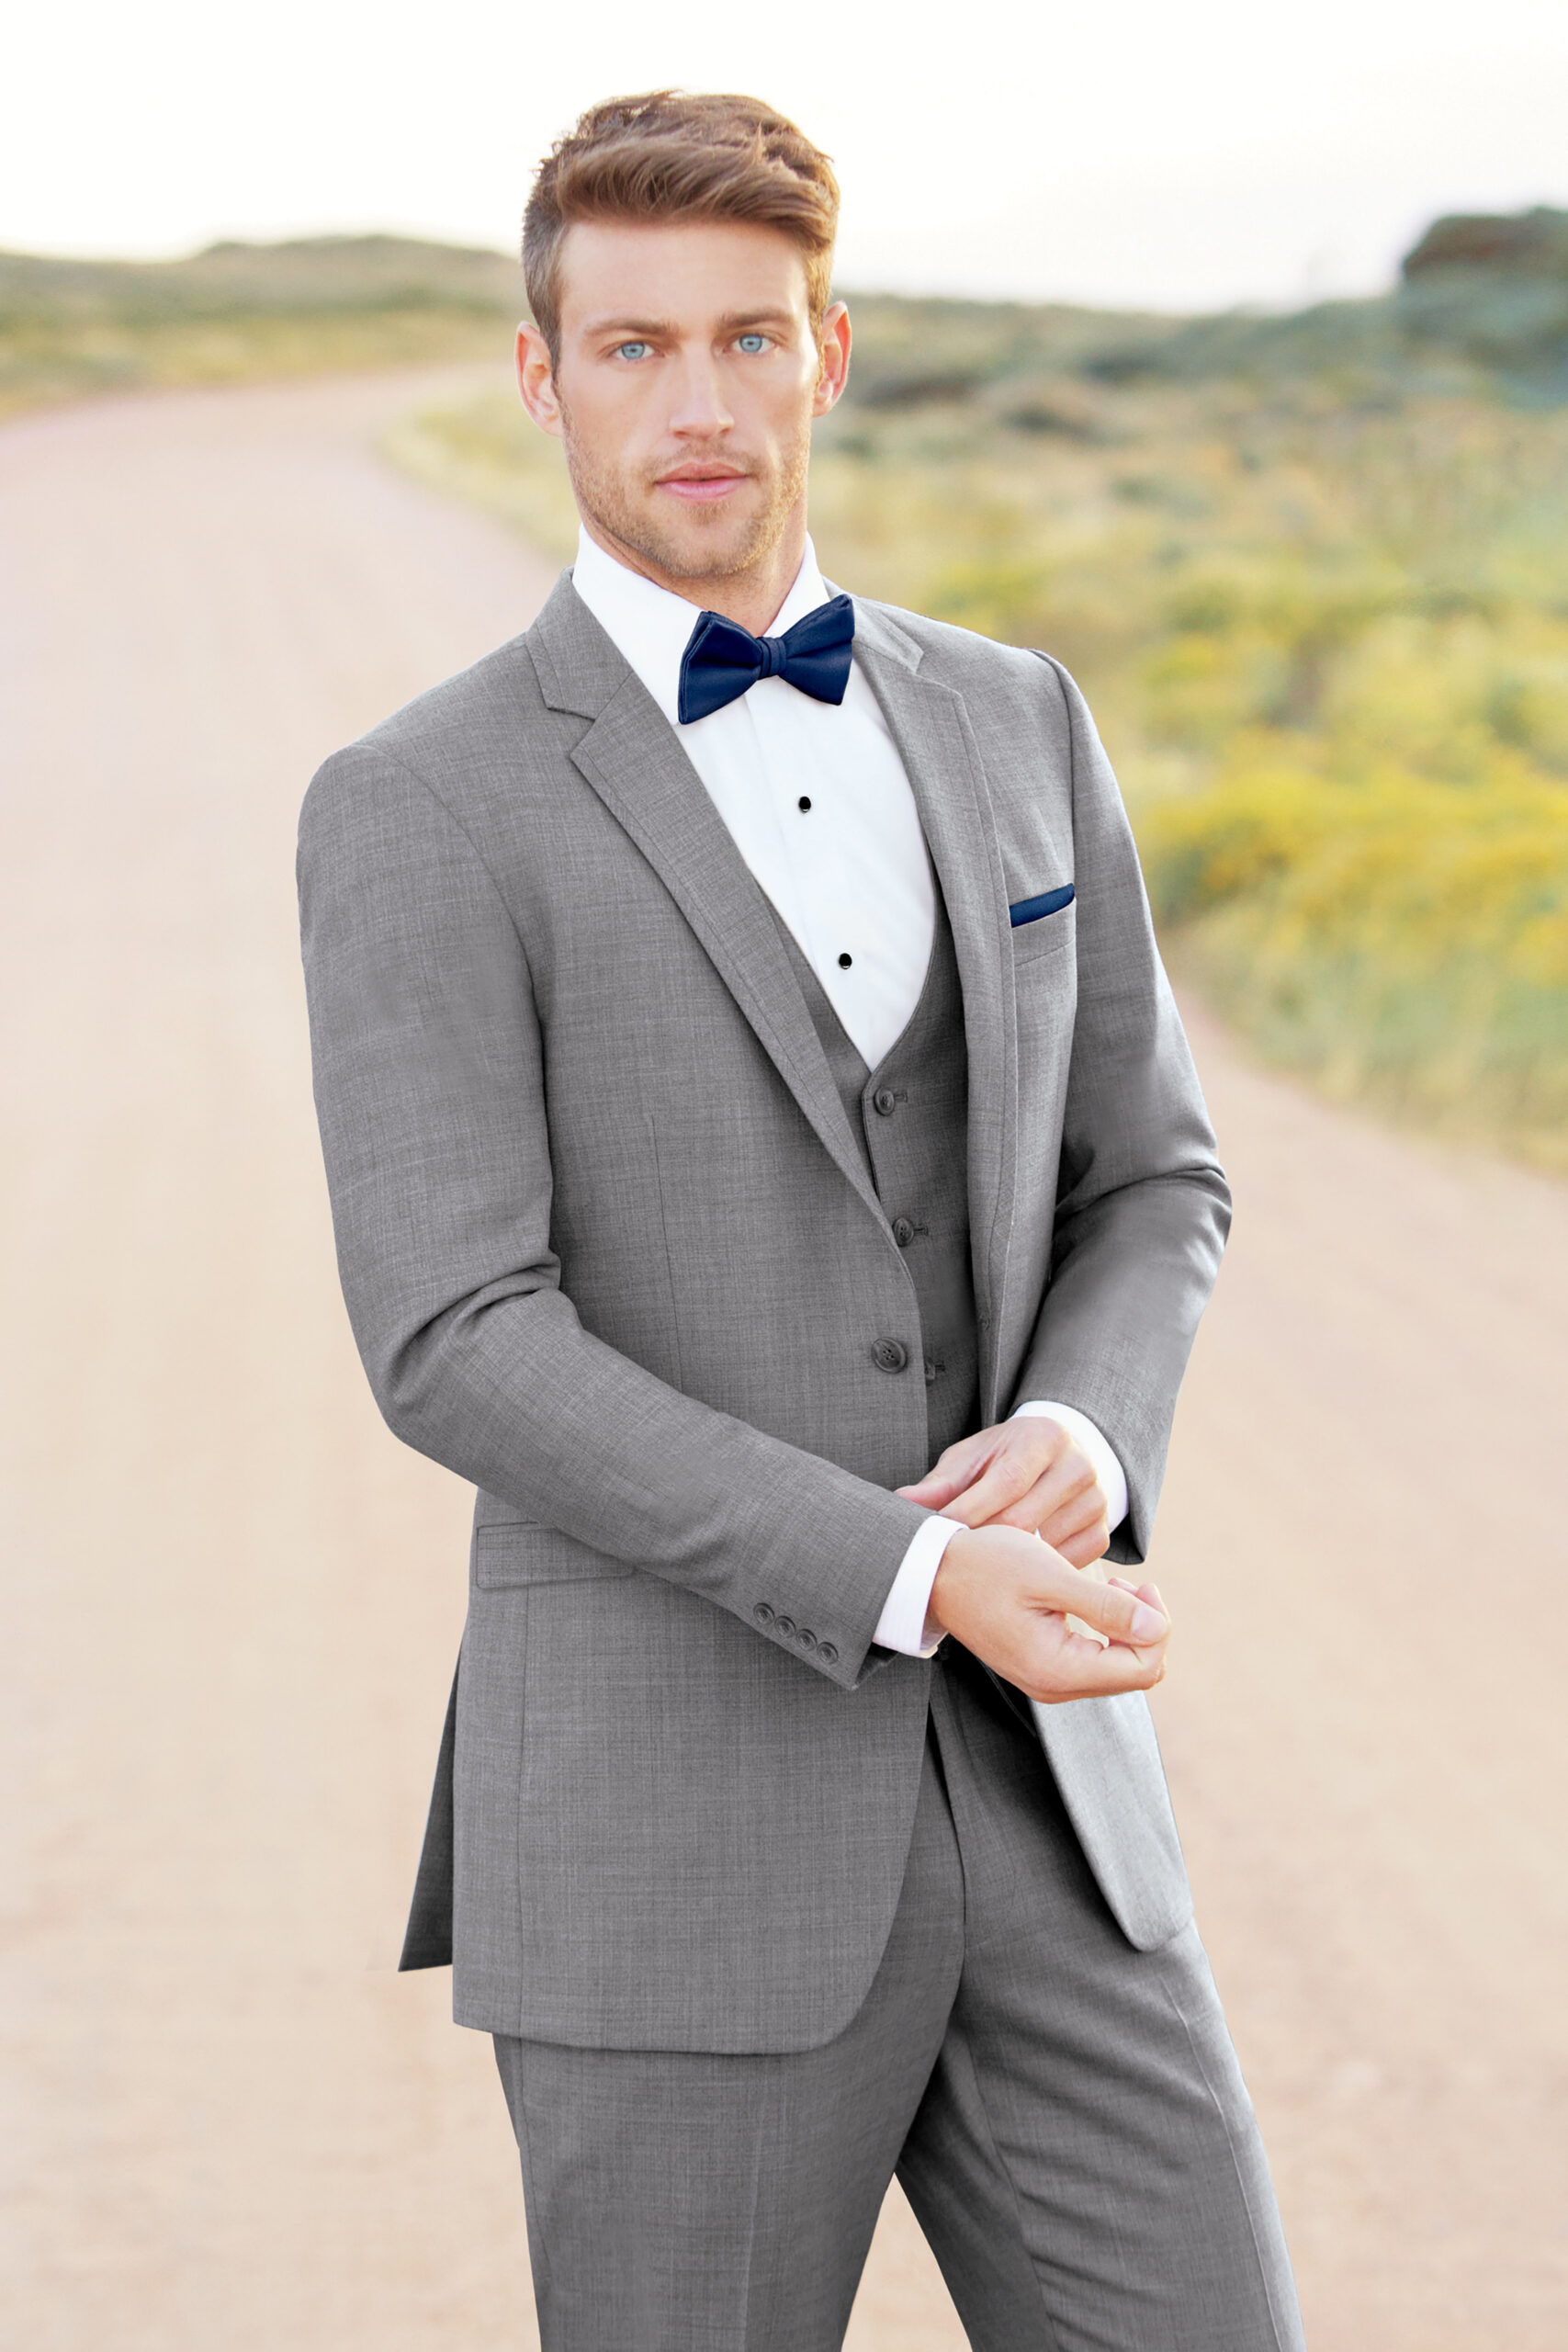 Clayton Light Grey Suit - the Winona Wedding Planners